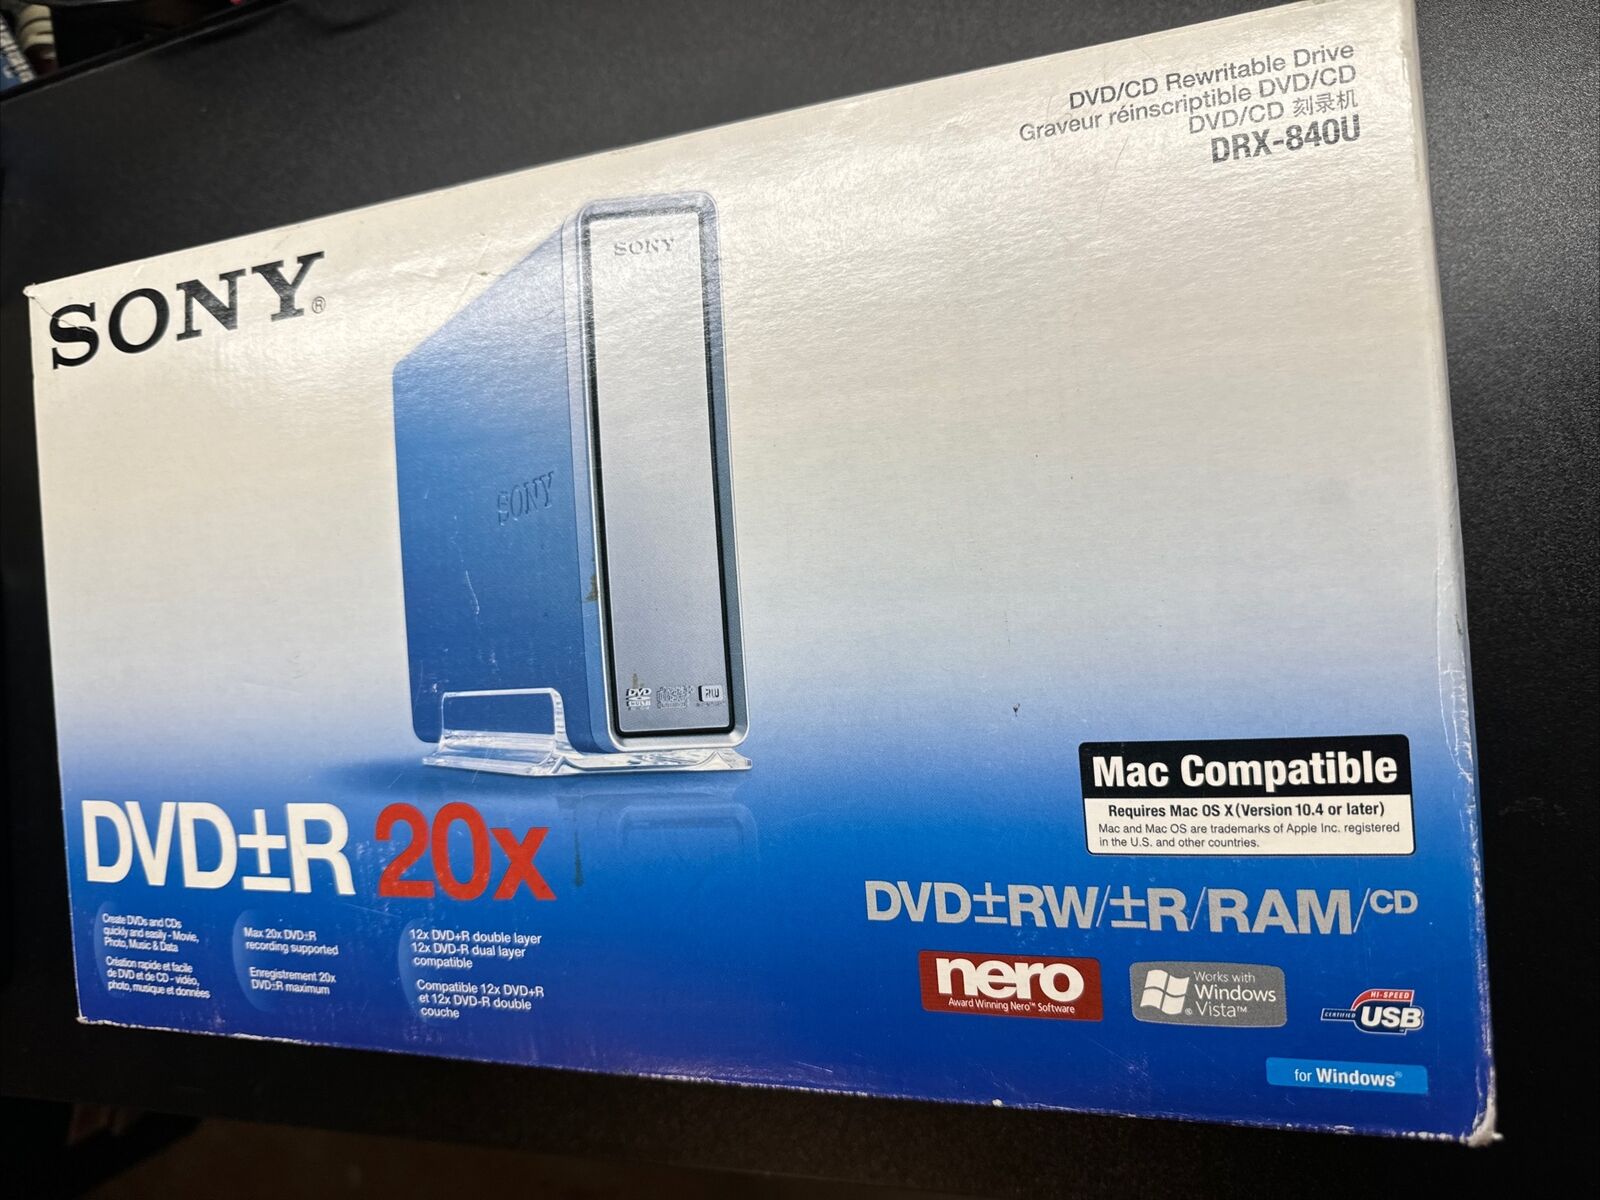 Sony DVD/CD+R 20X DRX-840U Rewritable Drive NERO Software Belkin USB NIB